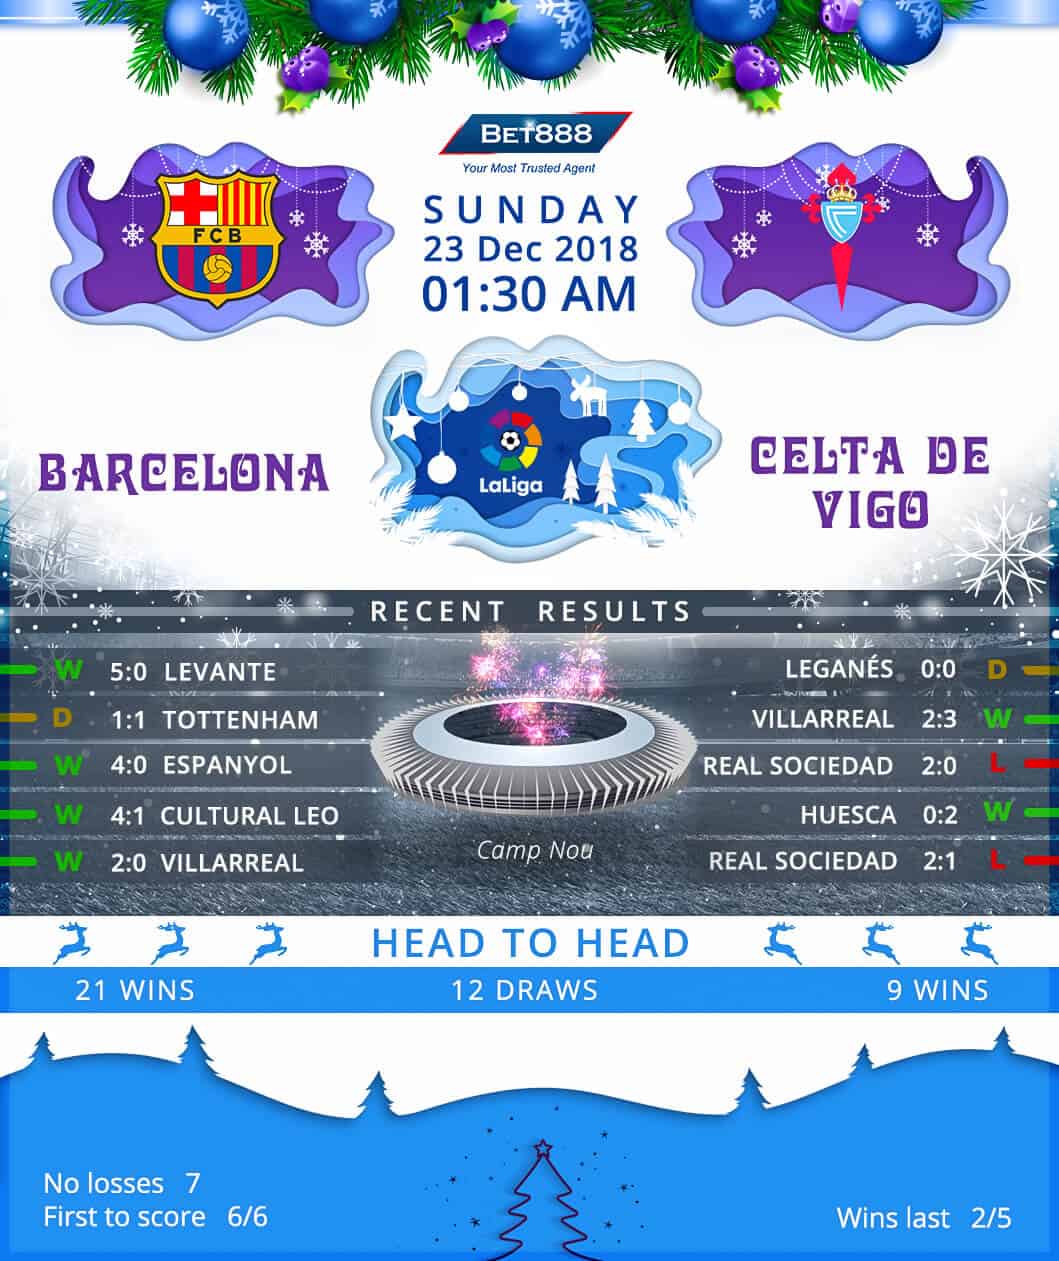 Barcelona vs Celta Vigo 23/12/18